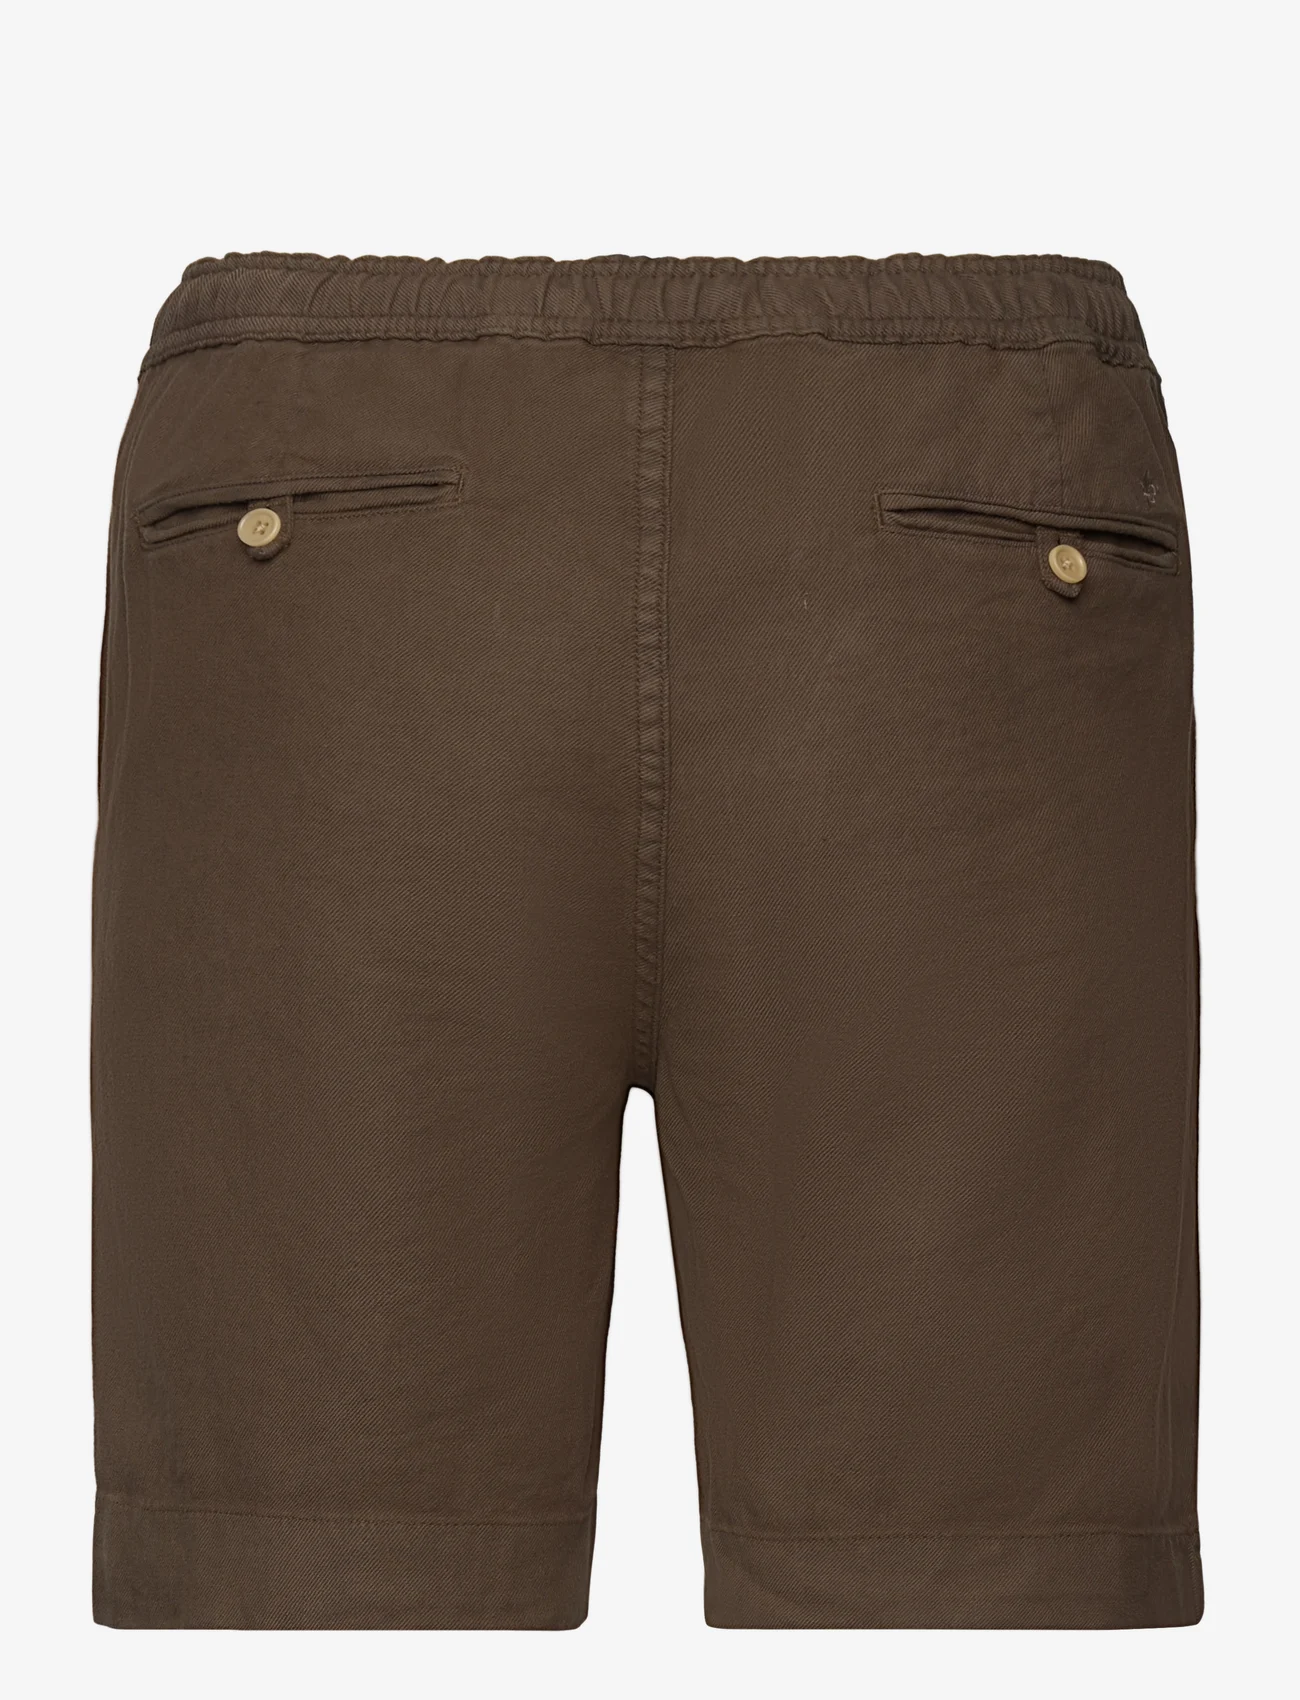 Morris - Winward Linen  Shorts - „chino“ stiliaus šortai - brown - 1